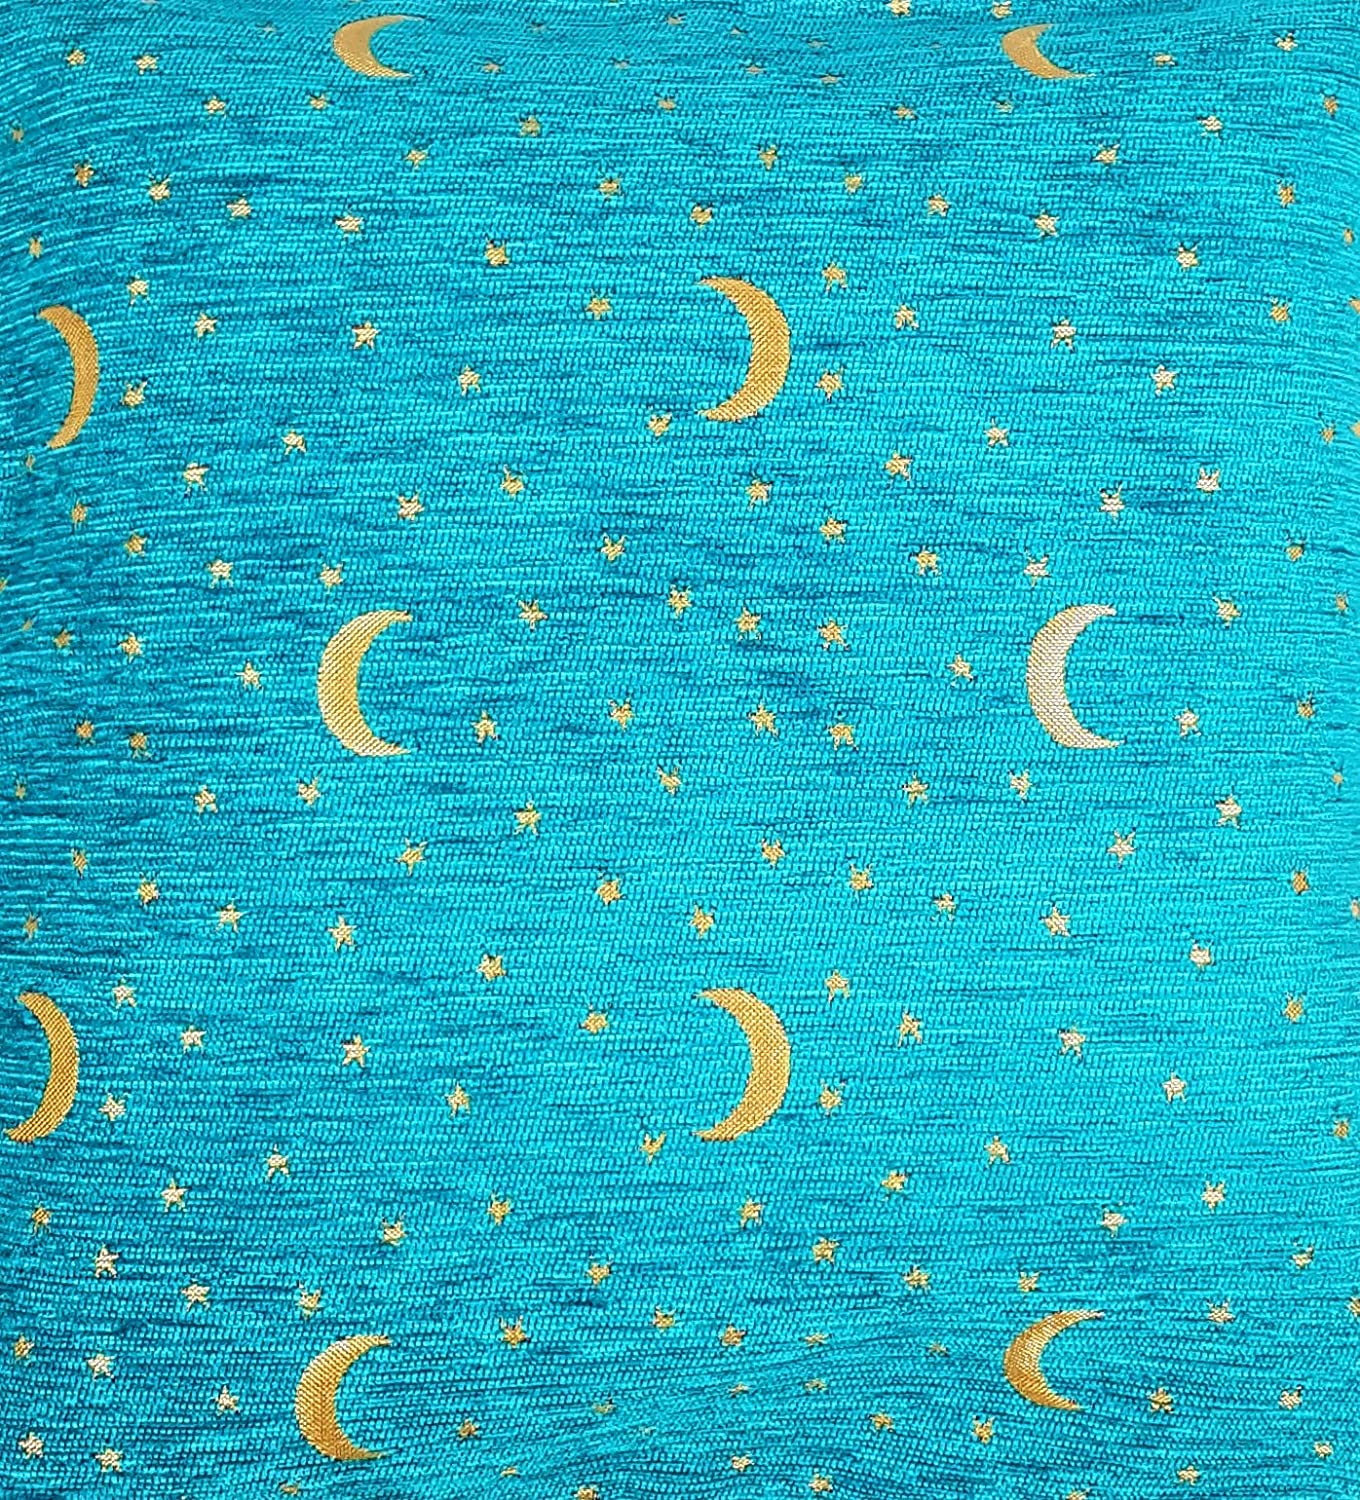 Orientalischer Kissenbezug 80x80 cm Kissen Kissenhülle Kissenbezug Bezug Cusion Viele Varianten (Mond-Sterne-Türkis)